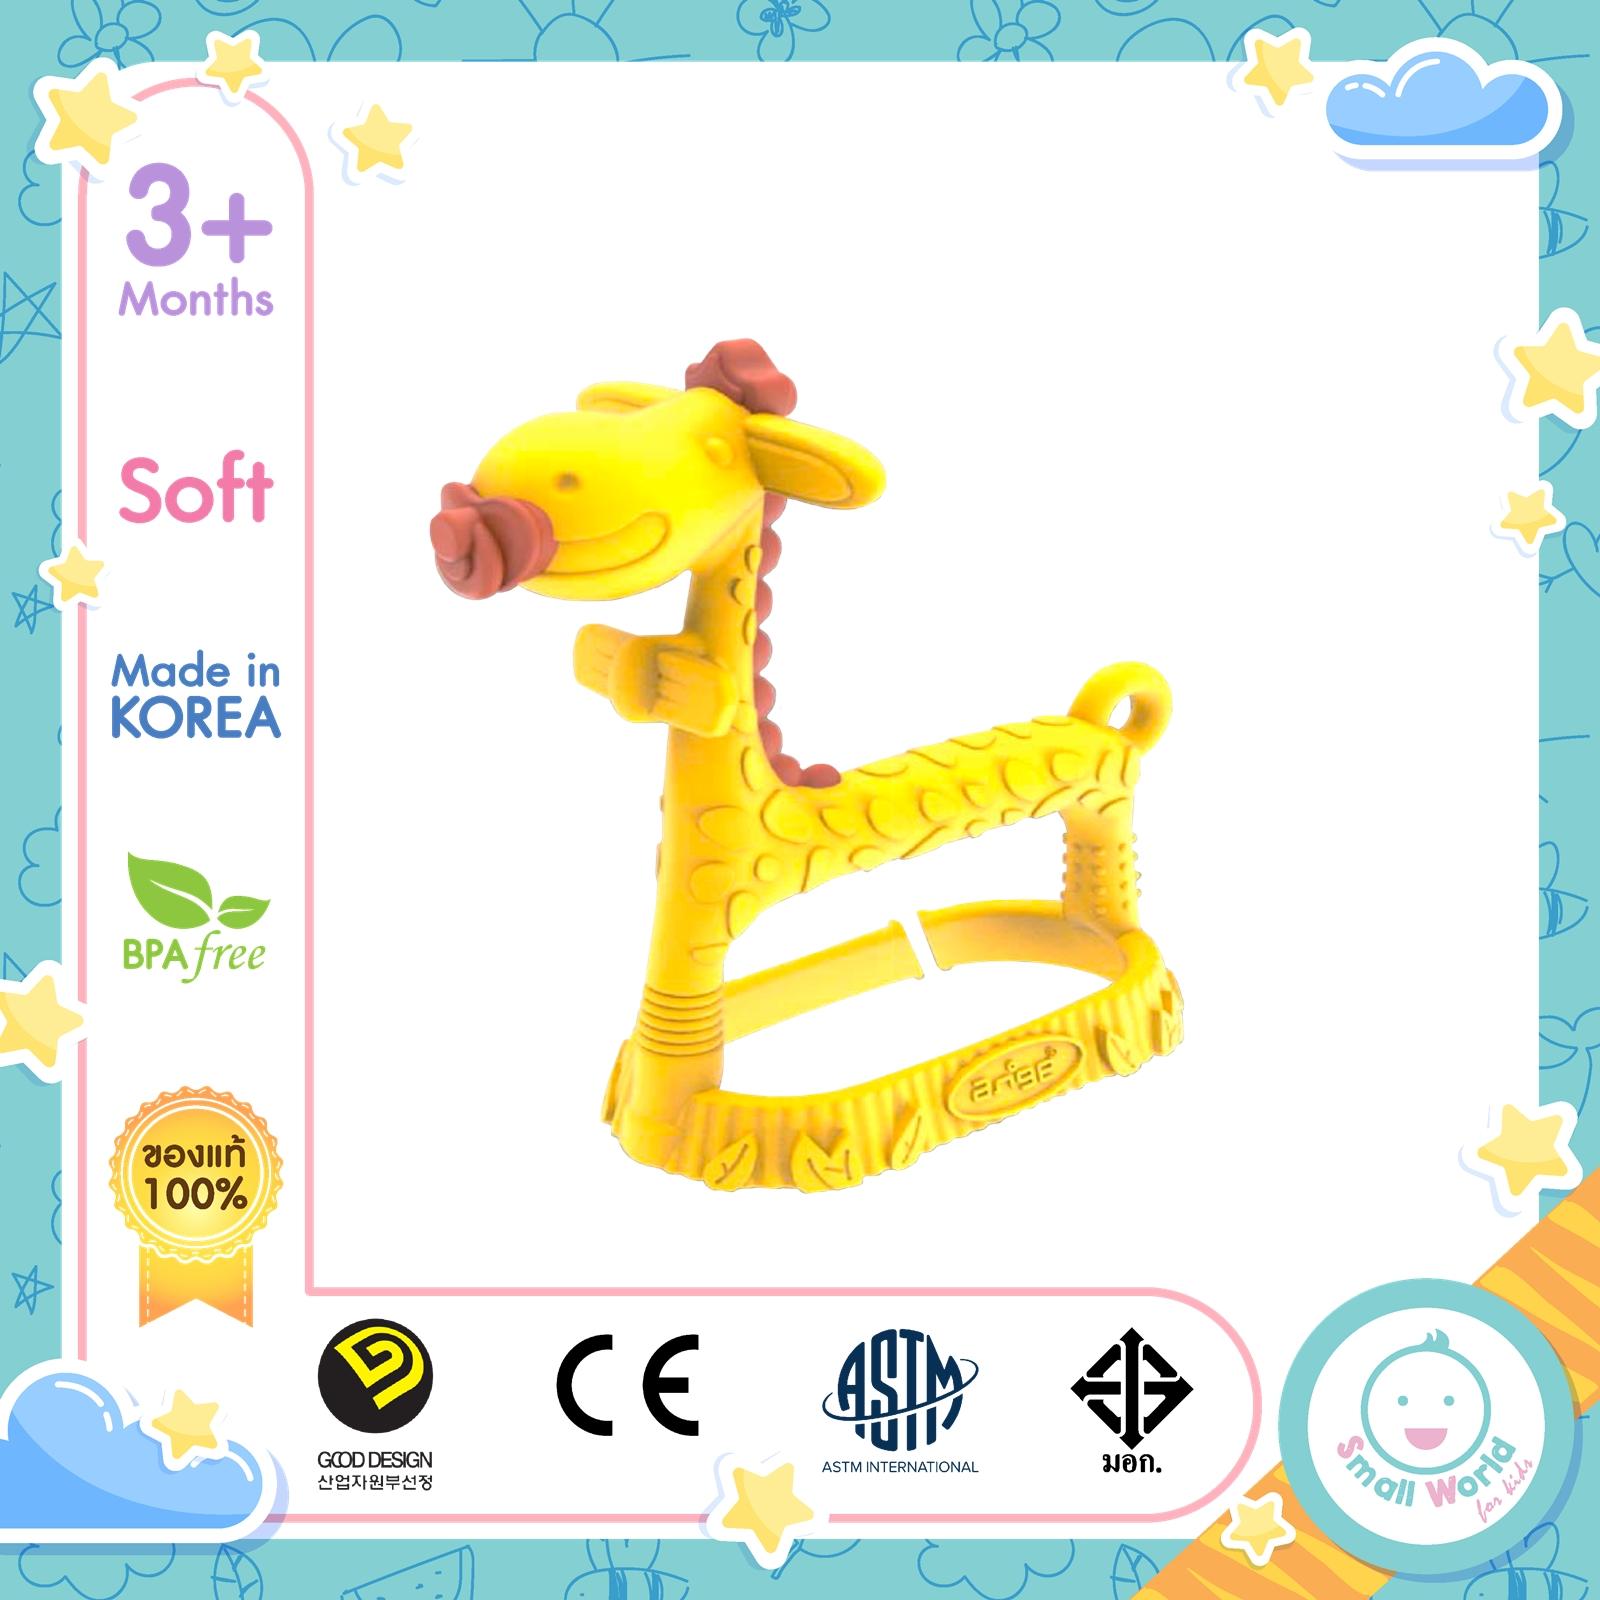 Ange อังจู ของเล่นเสริมพัฒนาการ สำหรับเด็กวัย 3 เดือน ยางกัดคล้องมือยีราฟแบบ 3D (3D Giraffe Bracelet Teether)ของแท้ มอก.